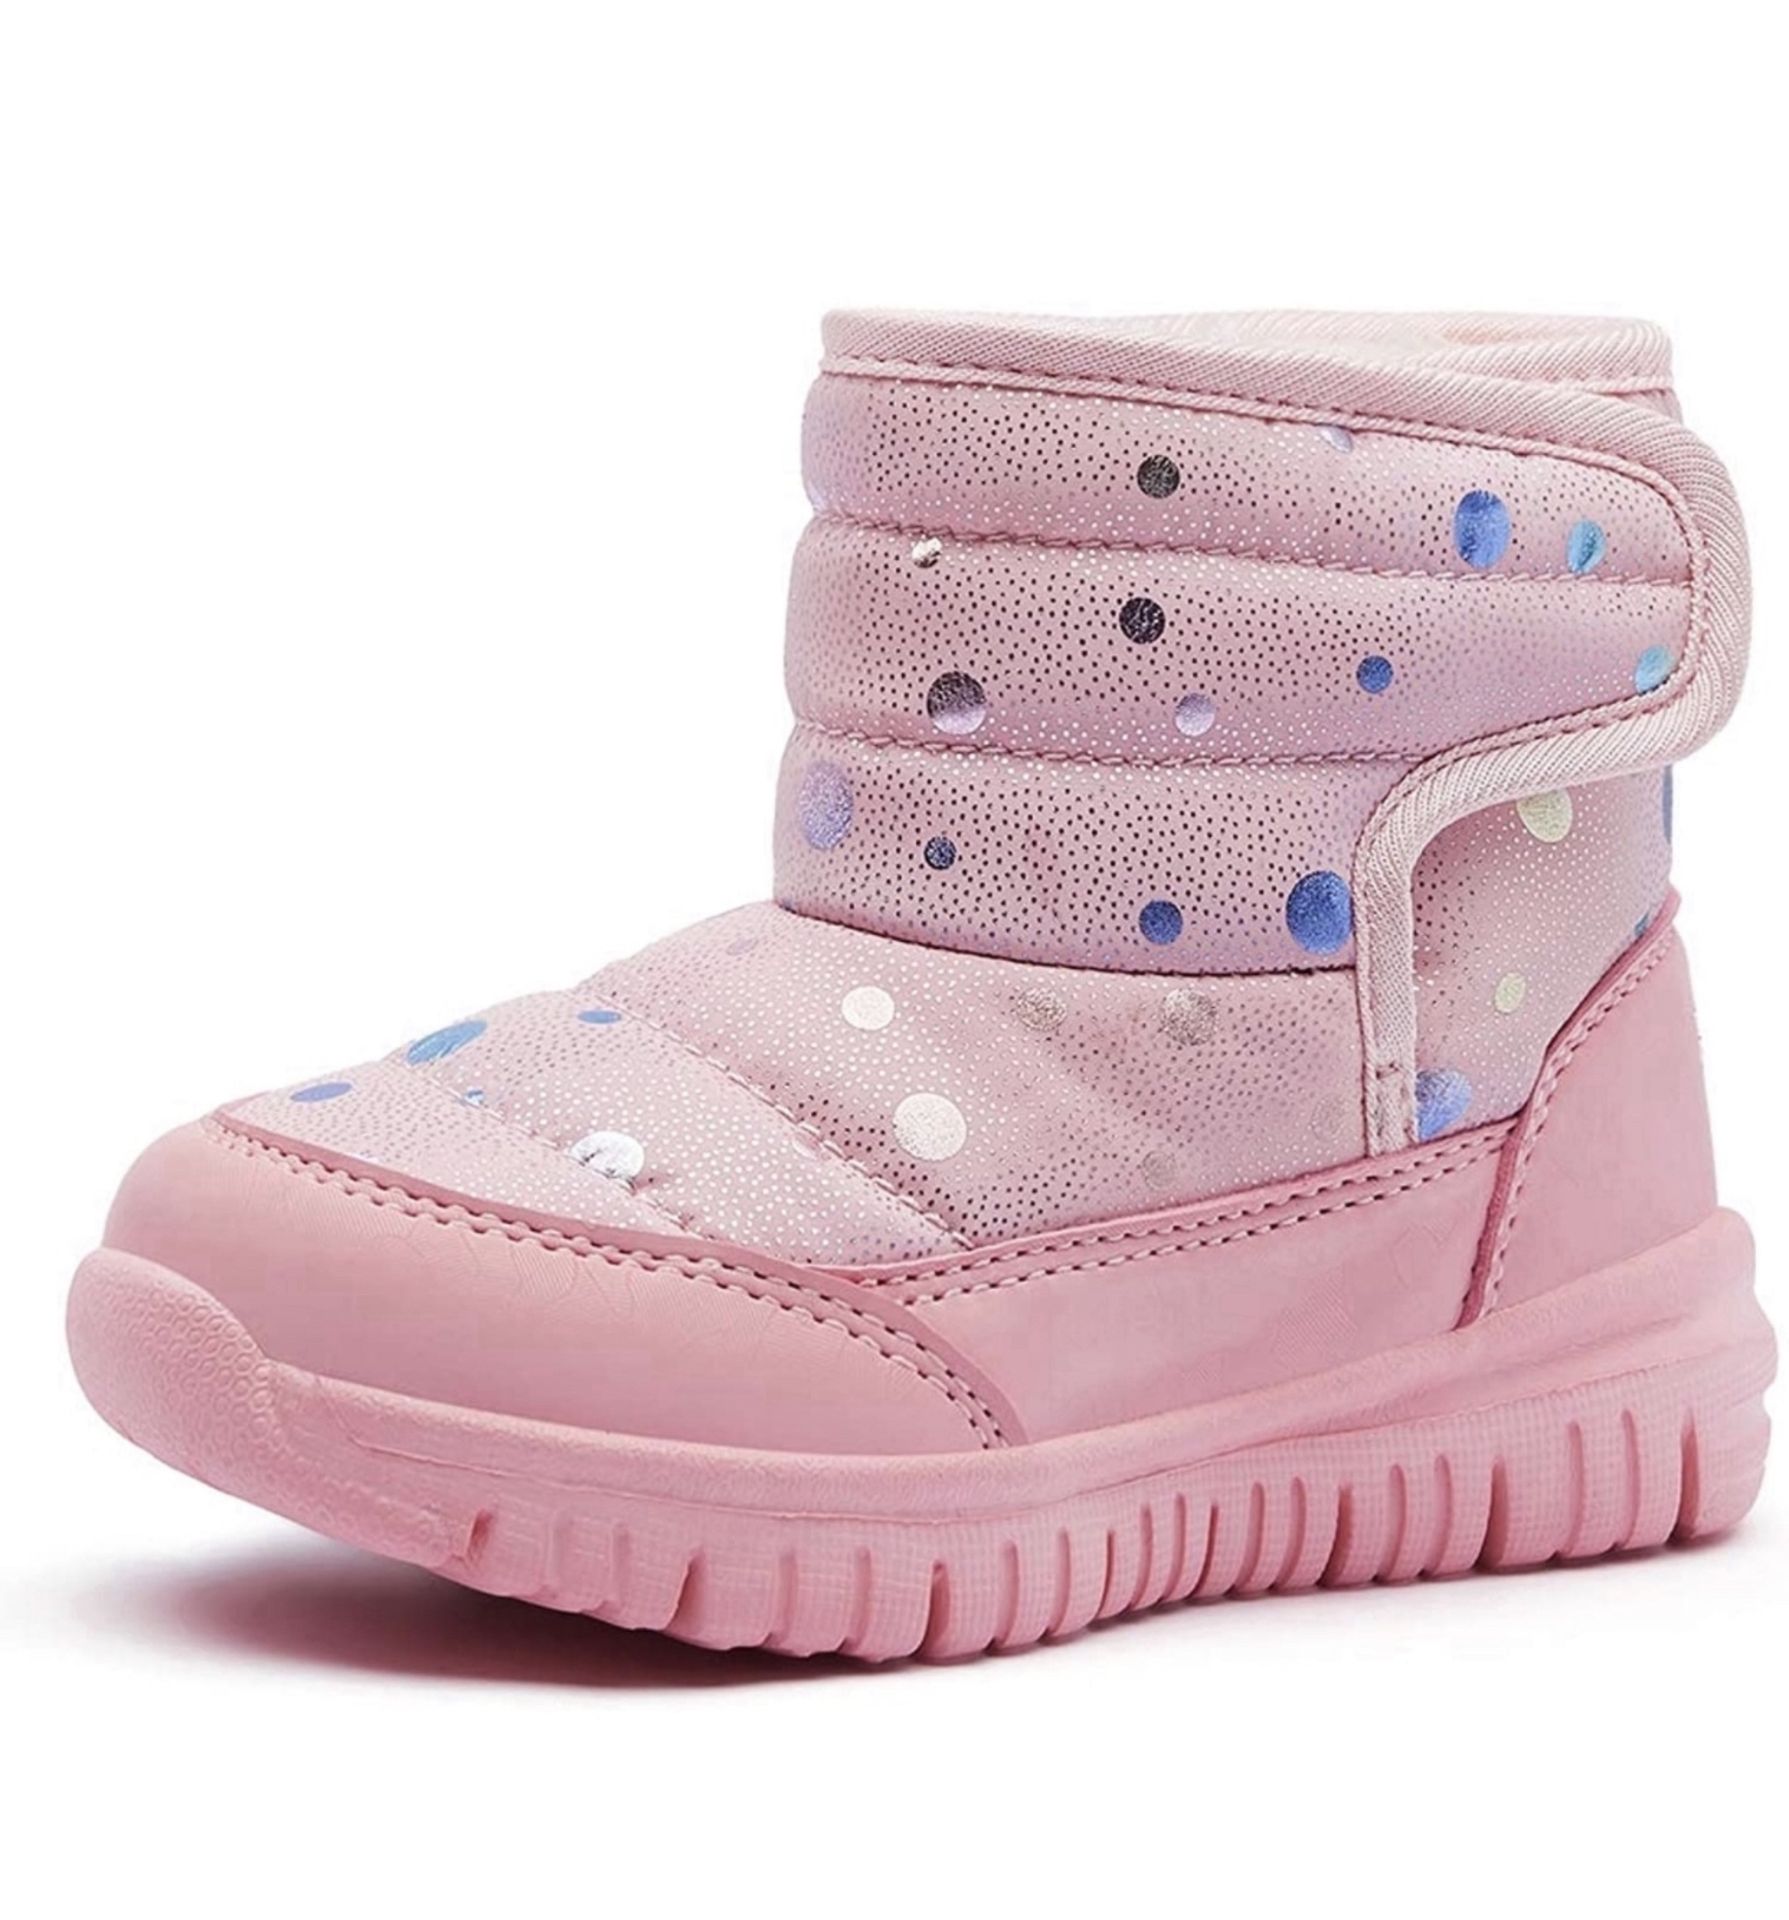 RRP £33.99 GubaRun Girls Boots Waterproof Fleece Lined Comfy Boots, 12.5 UK